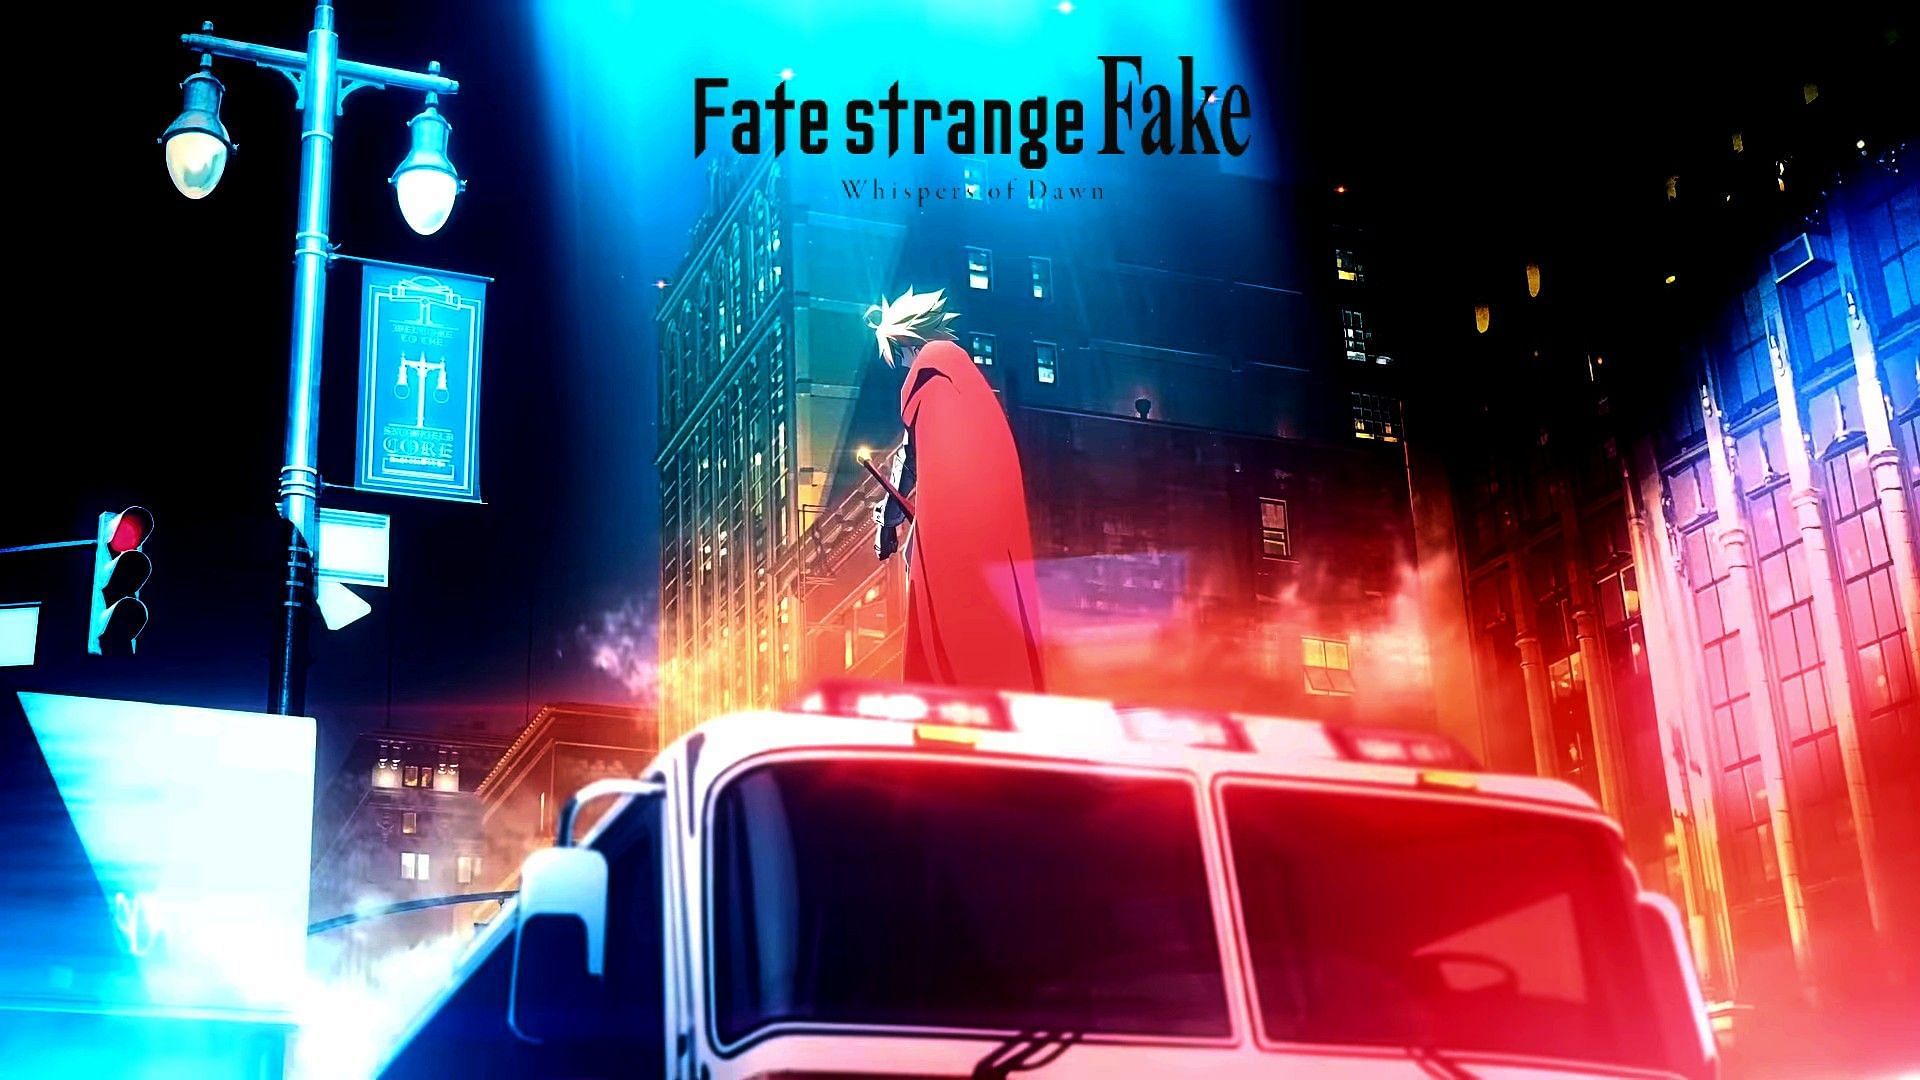 Fate/strange Fake Teaser Trailer, #NEWS Fate/strange Fake anime adaptation  announced with Japanese and English dub cast! #AOF2022 #strangeFake, By  Aniplex USA